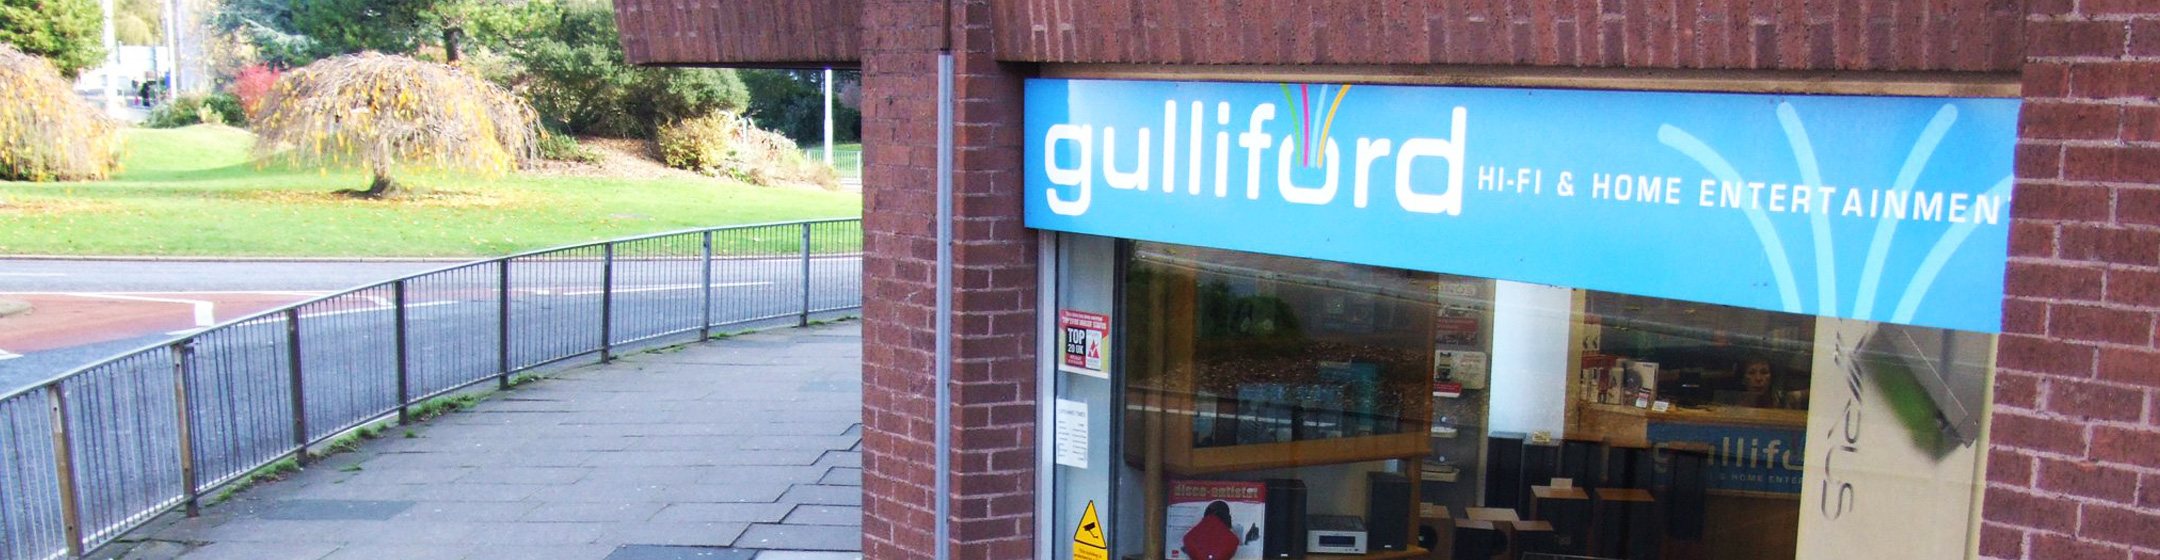 Pic showing the outside of Gulliford Hi-fi shop